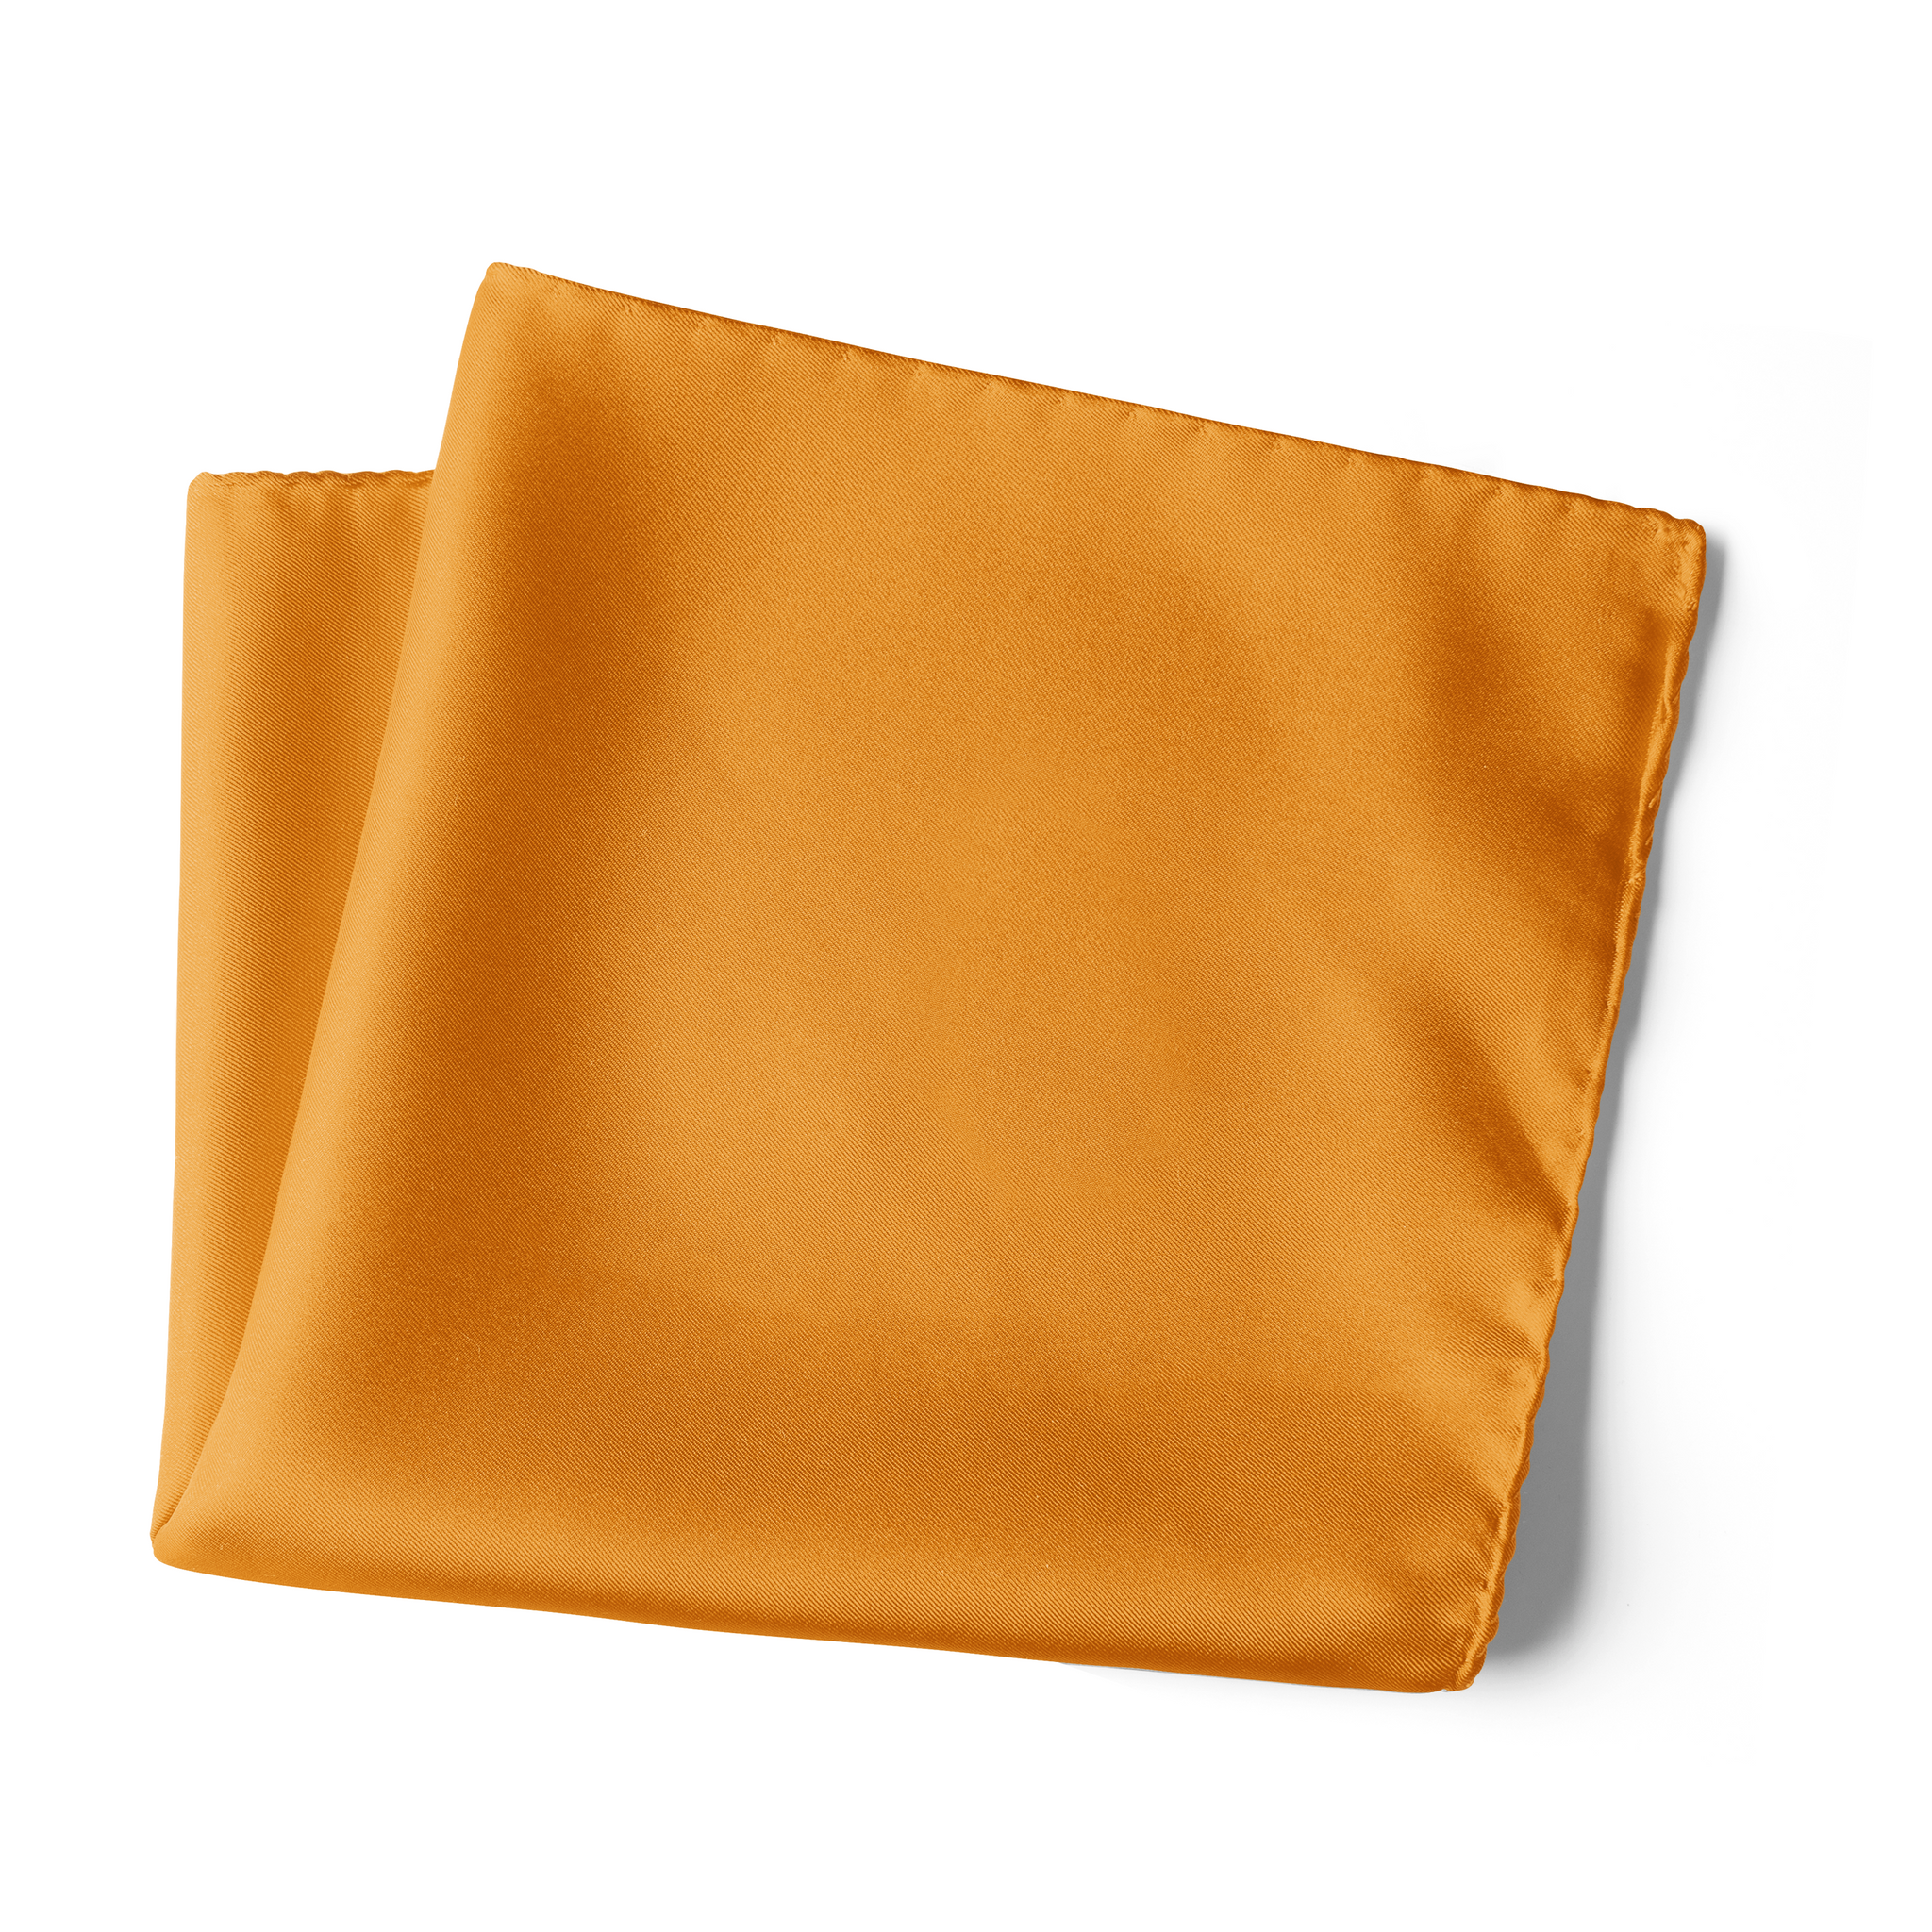 Chokore Caramel Colour Pure Silk Pocket Square, from the Solids Line